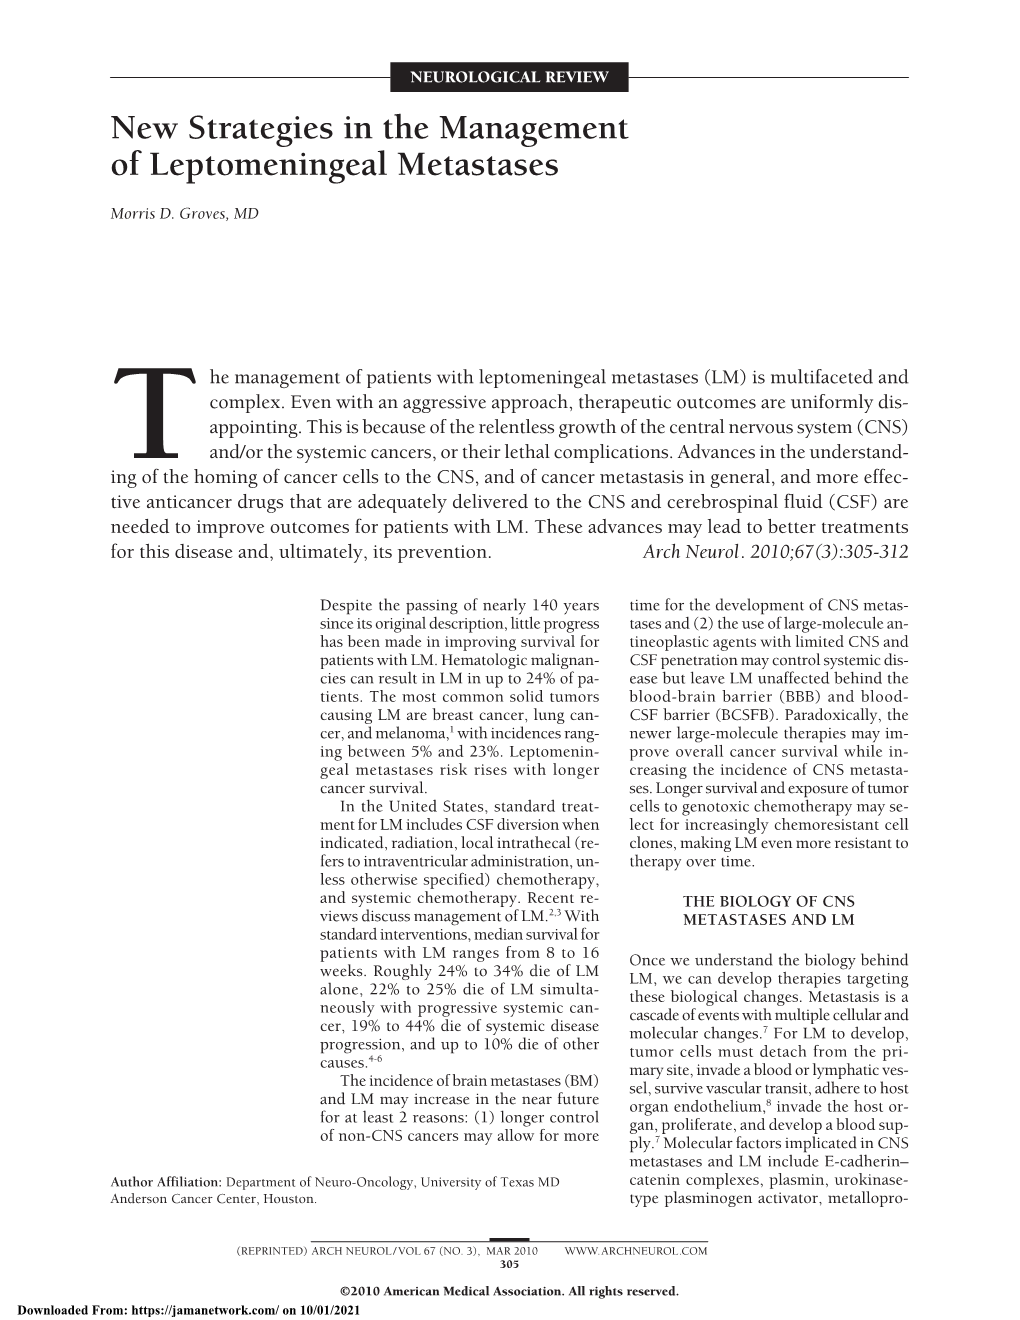 New Strategies in the Management of Leptomeningeal Metastases